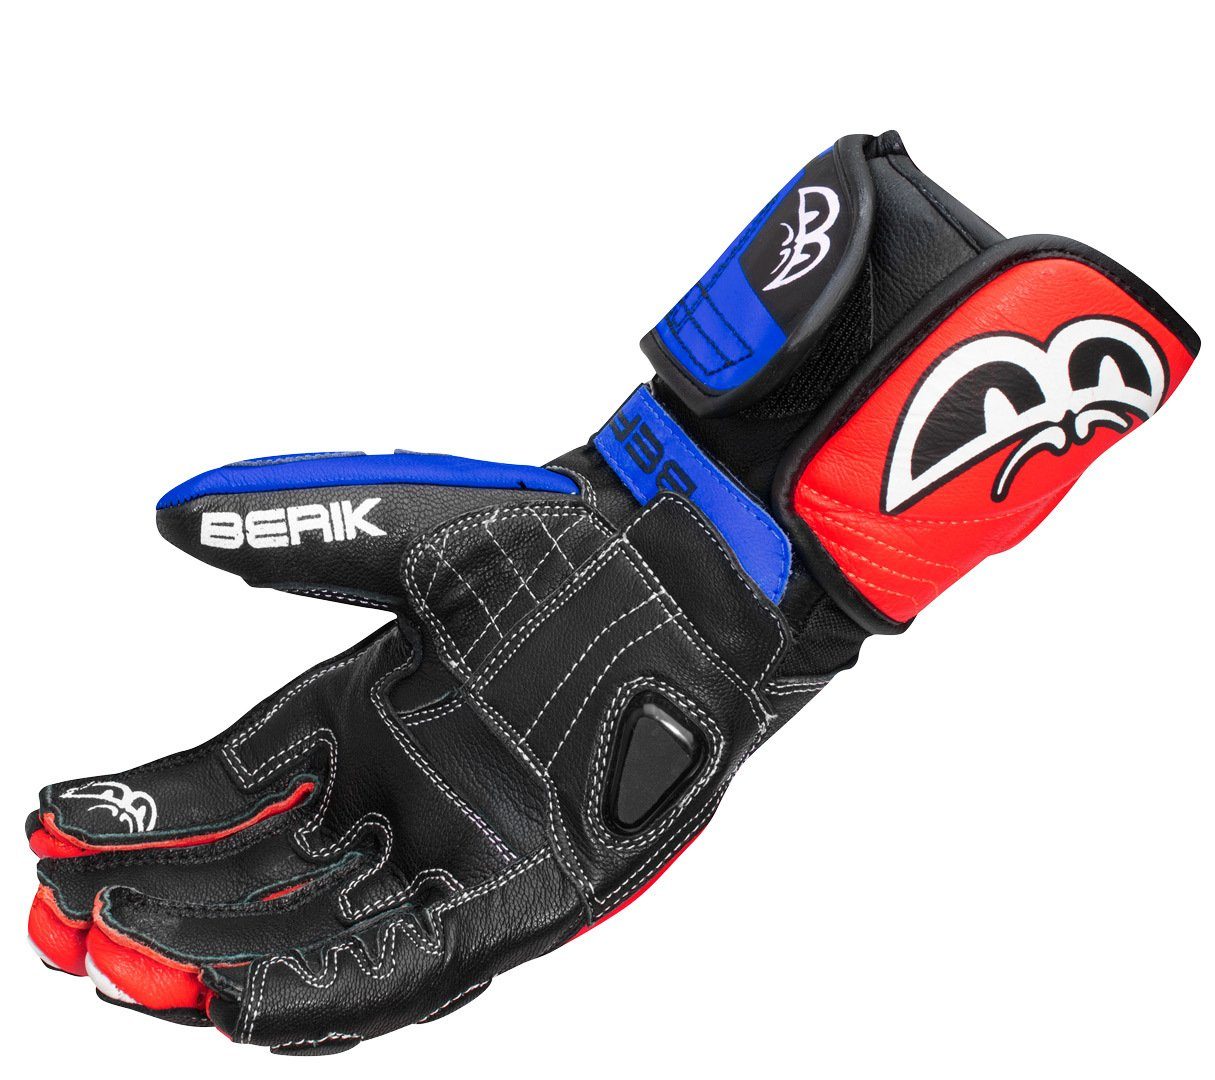 Pro Motorradhandschuhe Black/Blue/Red Track Motorradhandschuhe Berik